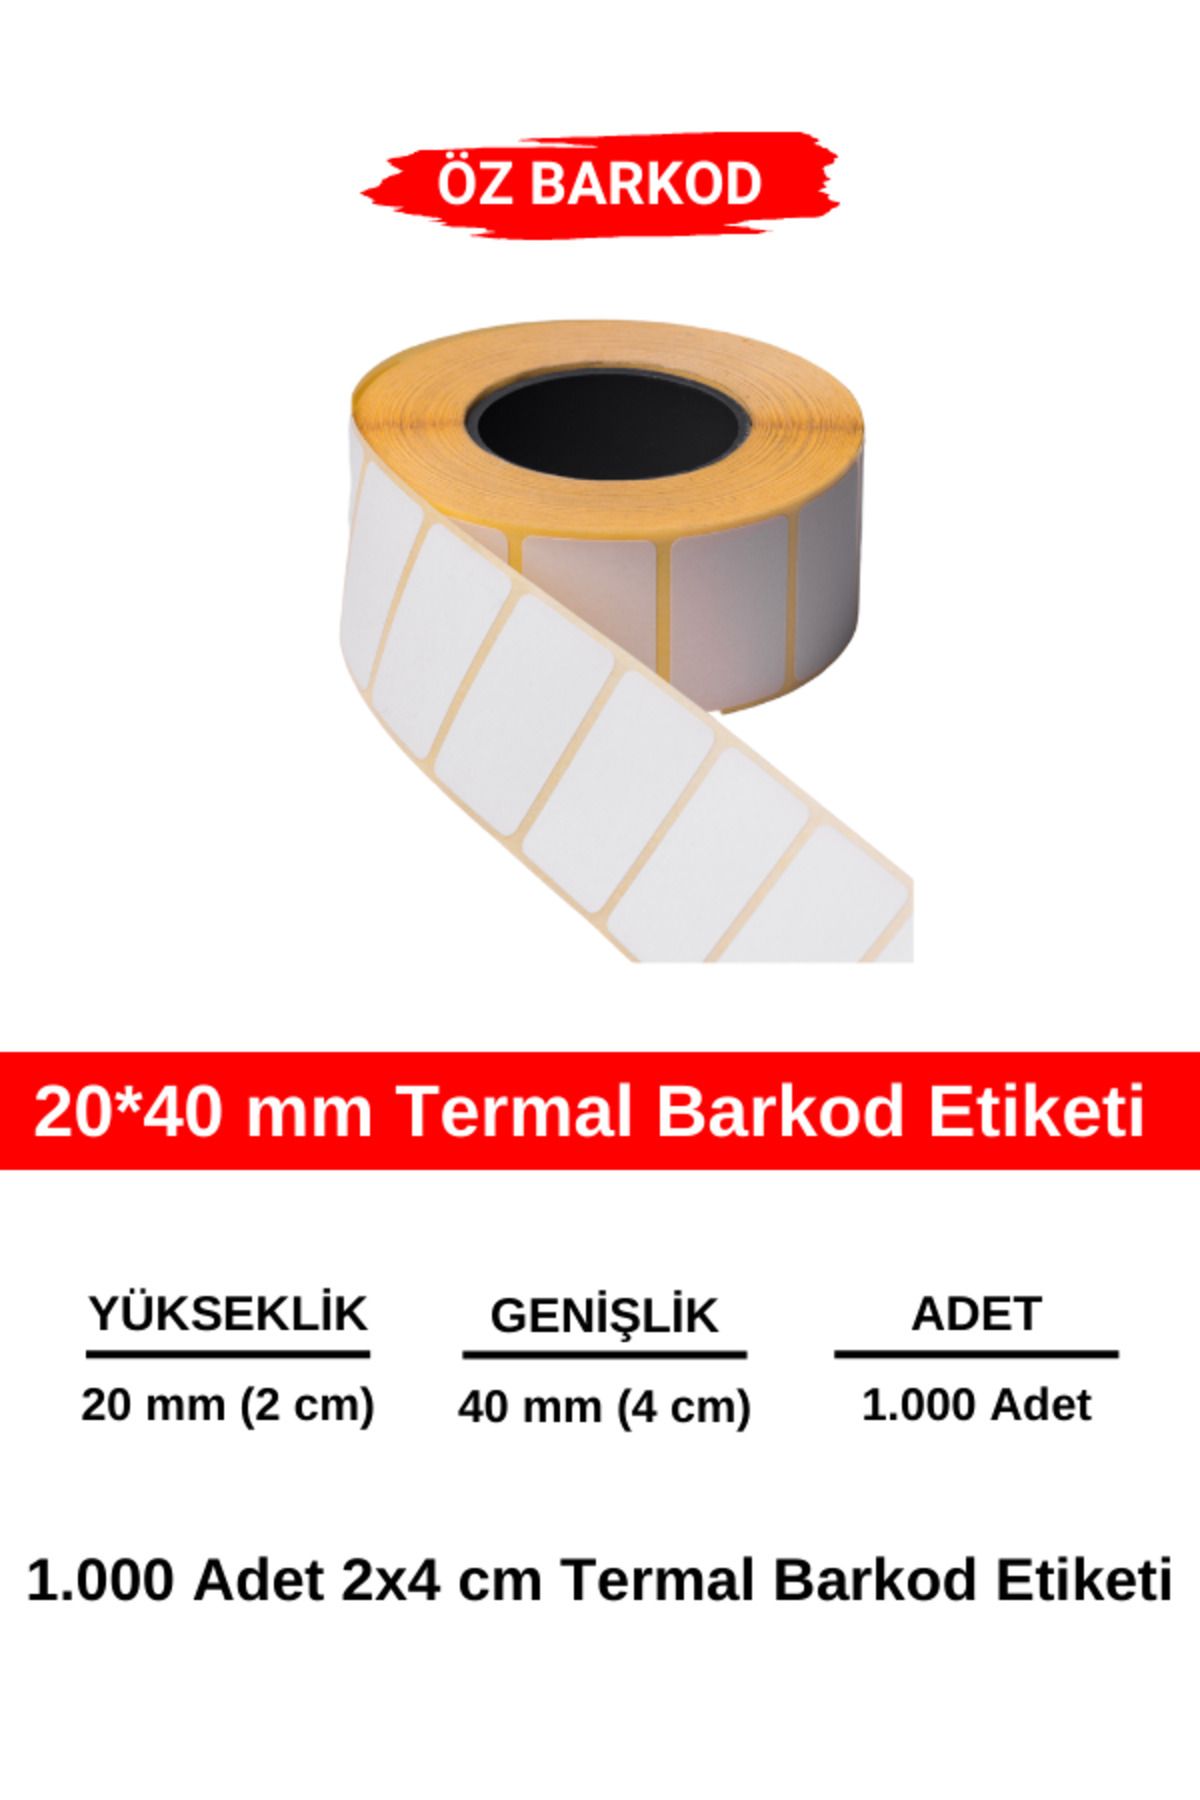 ÖZ BARKOD 20*40 mm Barkod Etiketi - 1000 Adet Termal Etiket